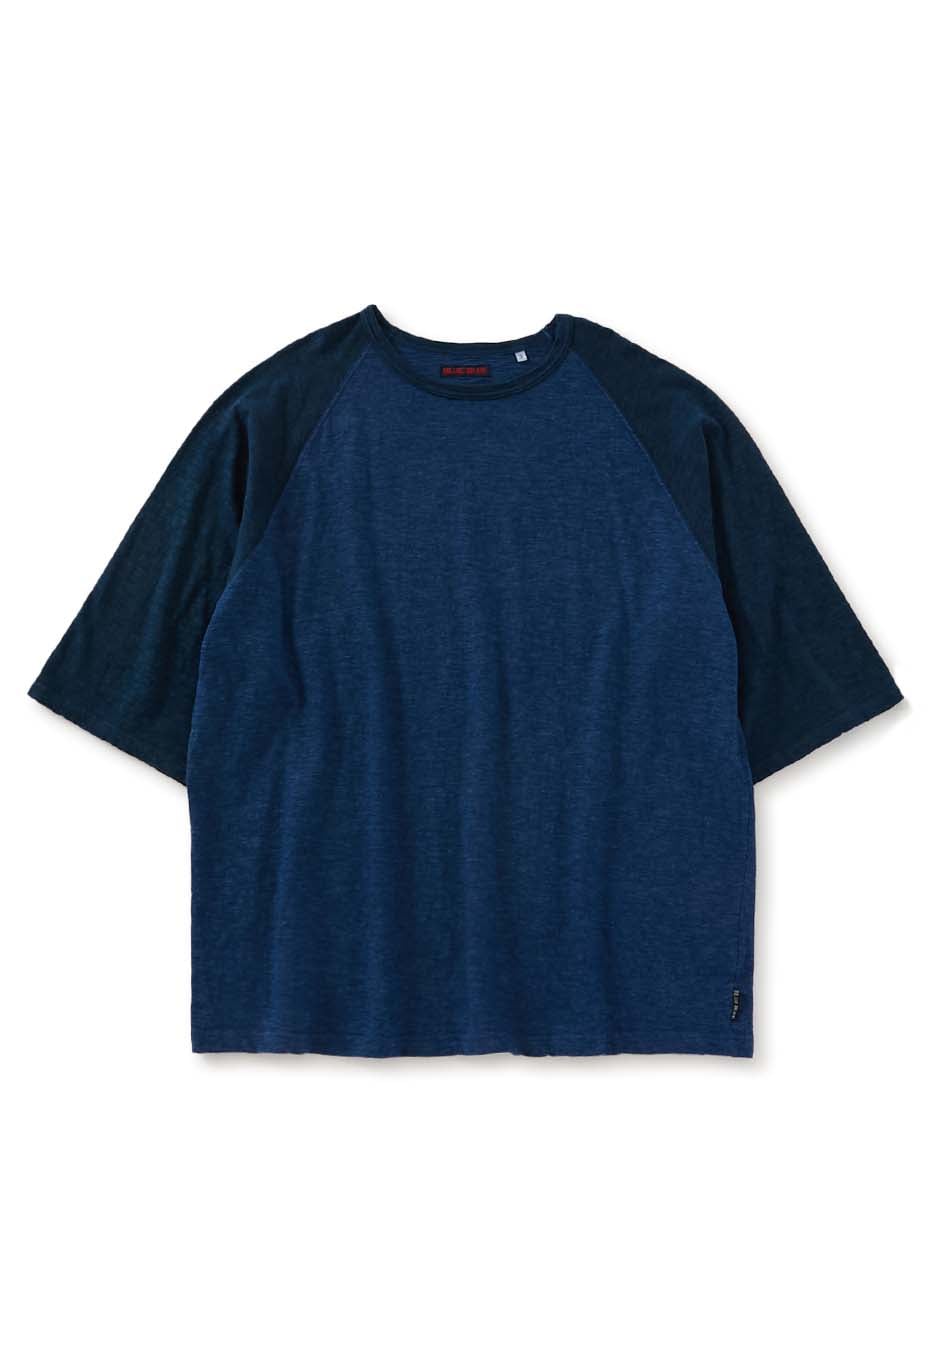 Indigo Slab plain stitch Two Tone raglan sleeve Half Sleeve T-shirts